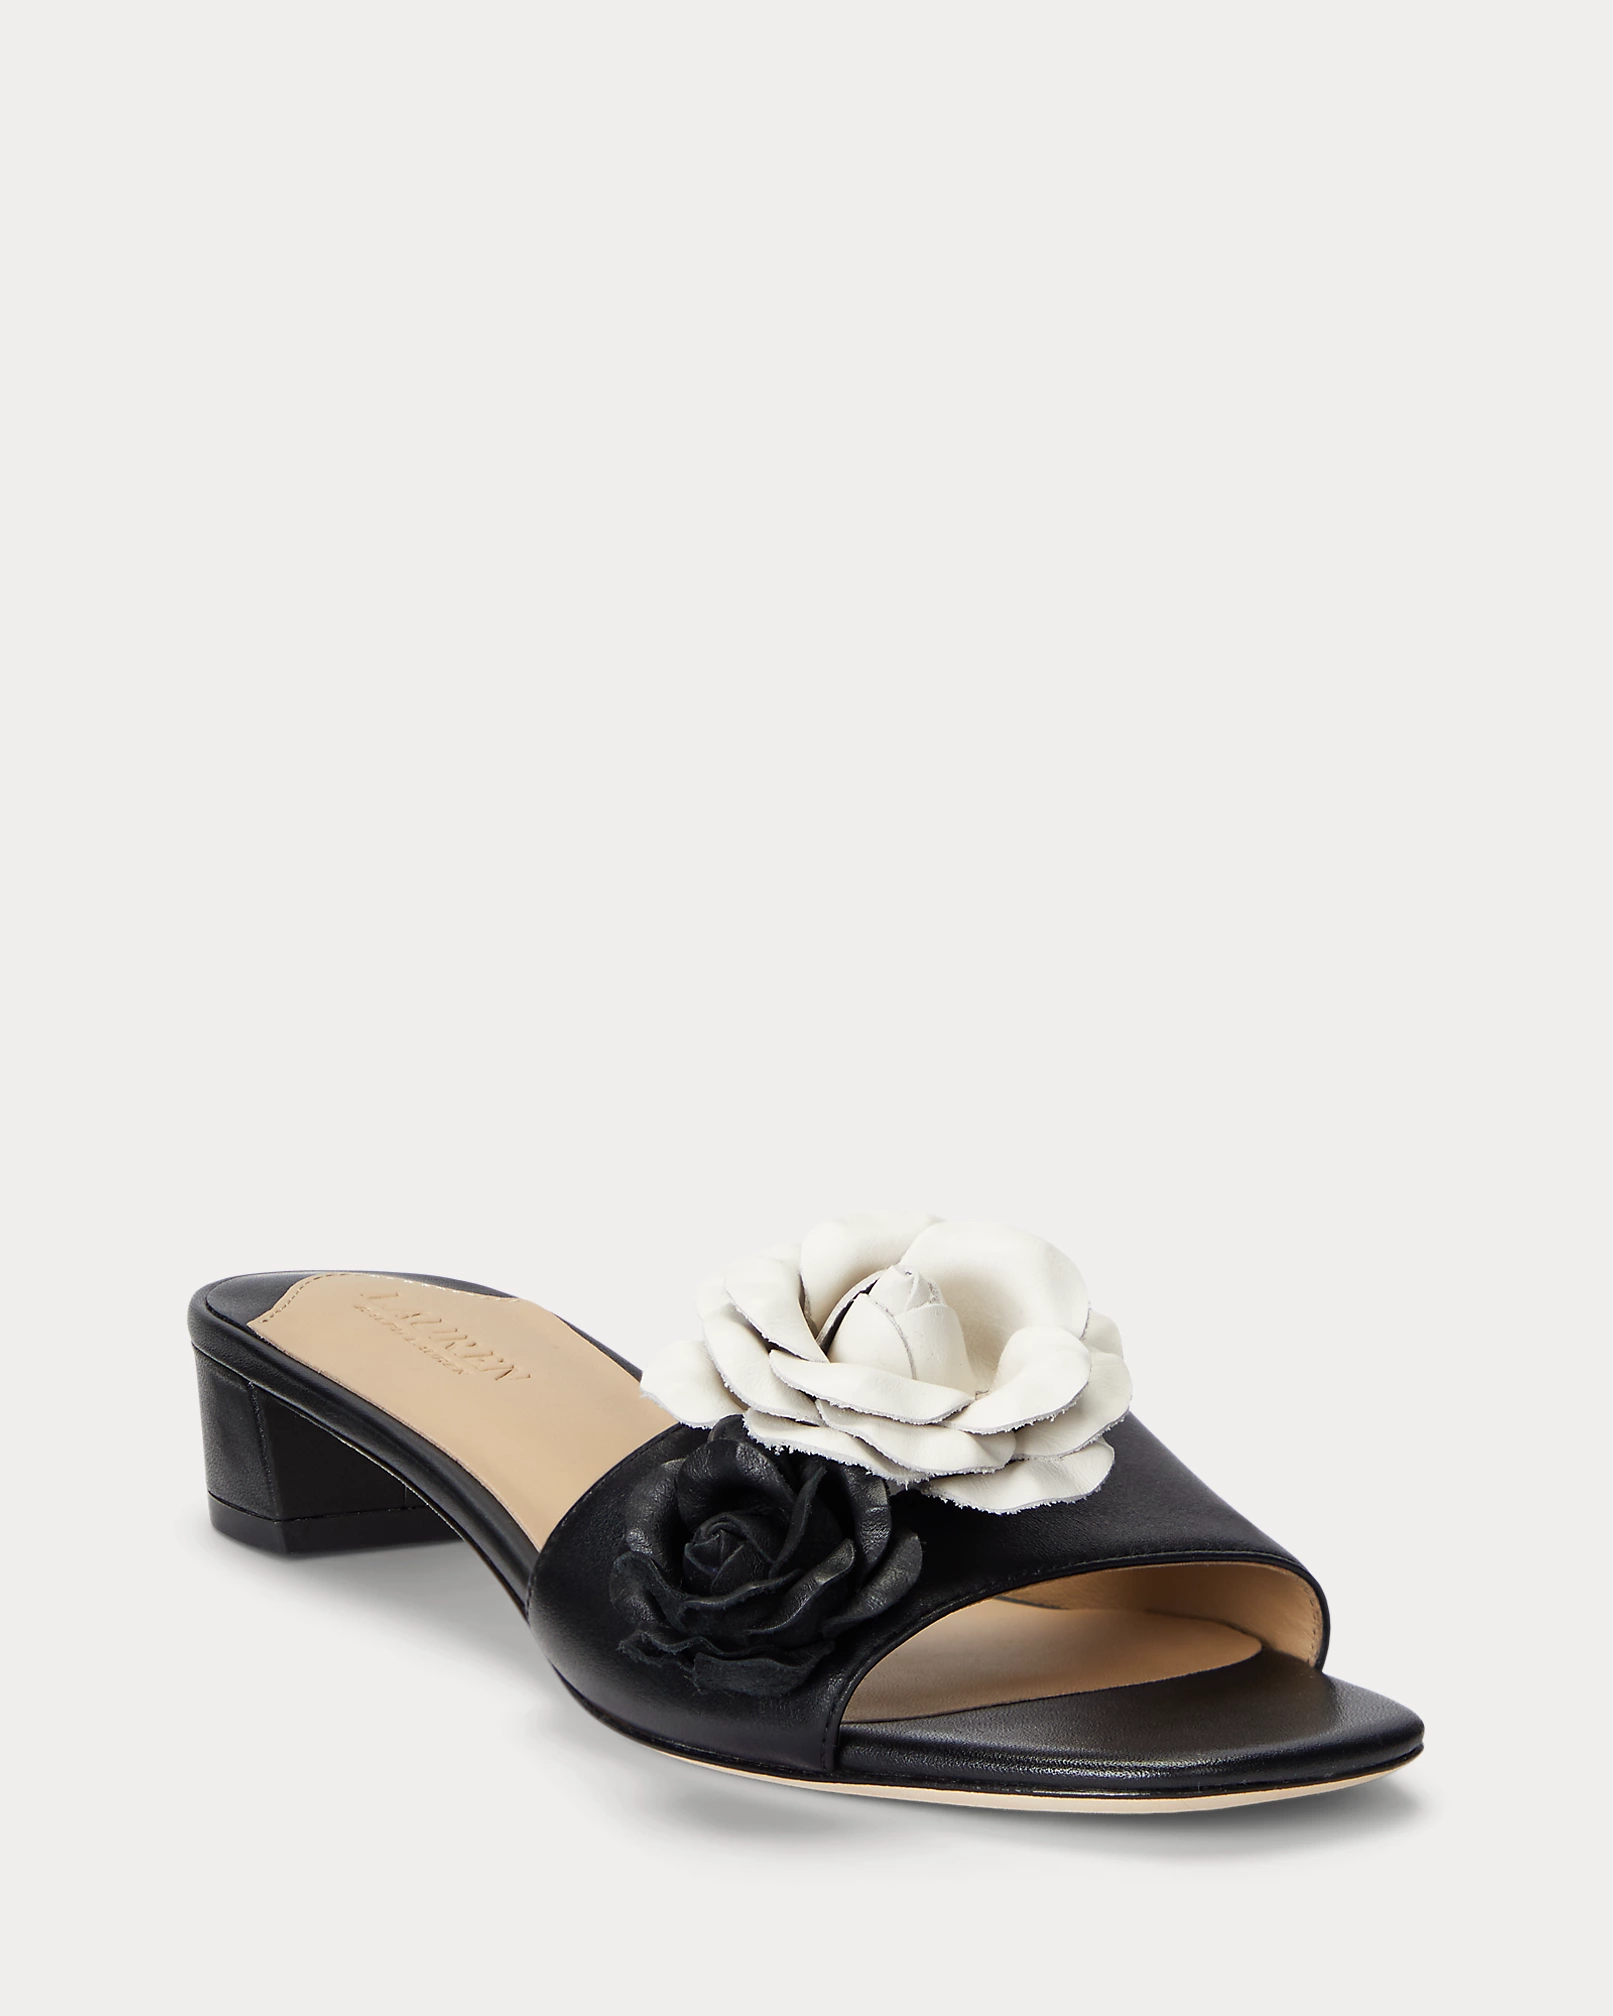 Ralph Lauren - Lauren - Fay Floral-Trim Nappa Leather Sandal - Black/Soft White